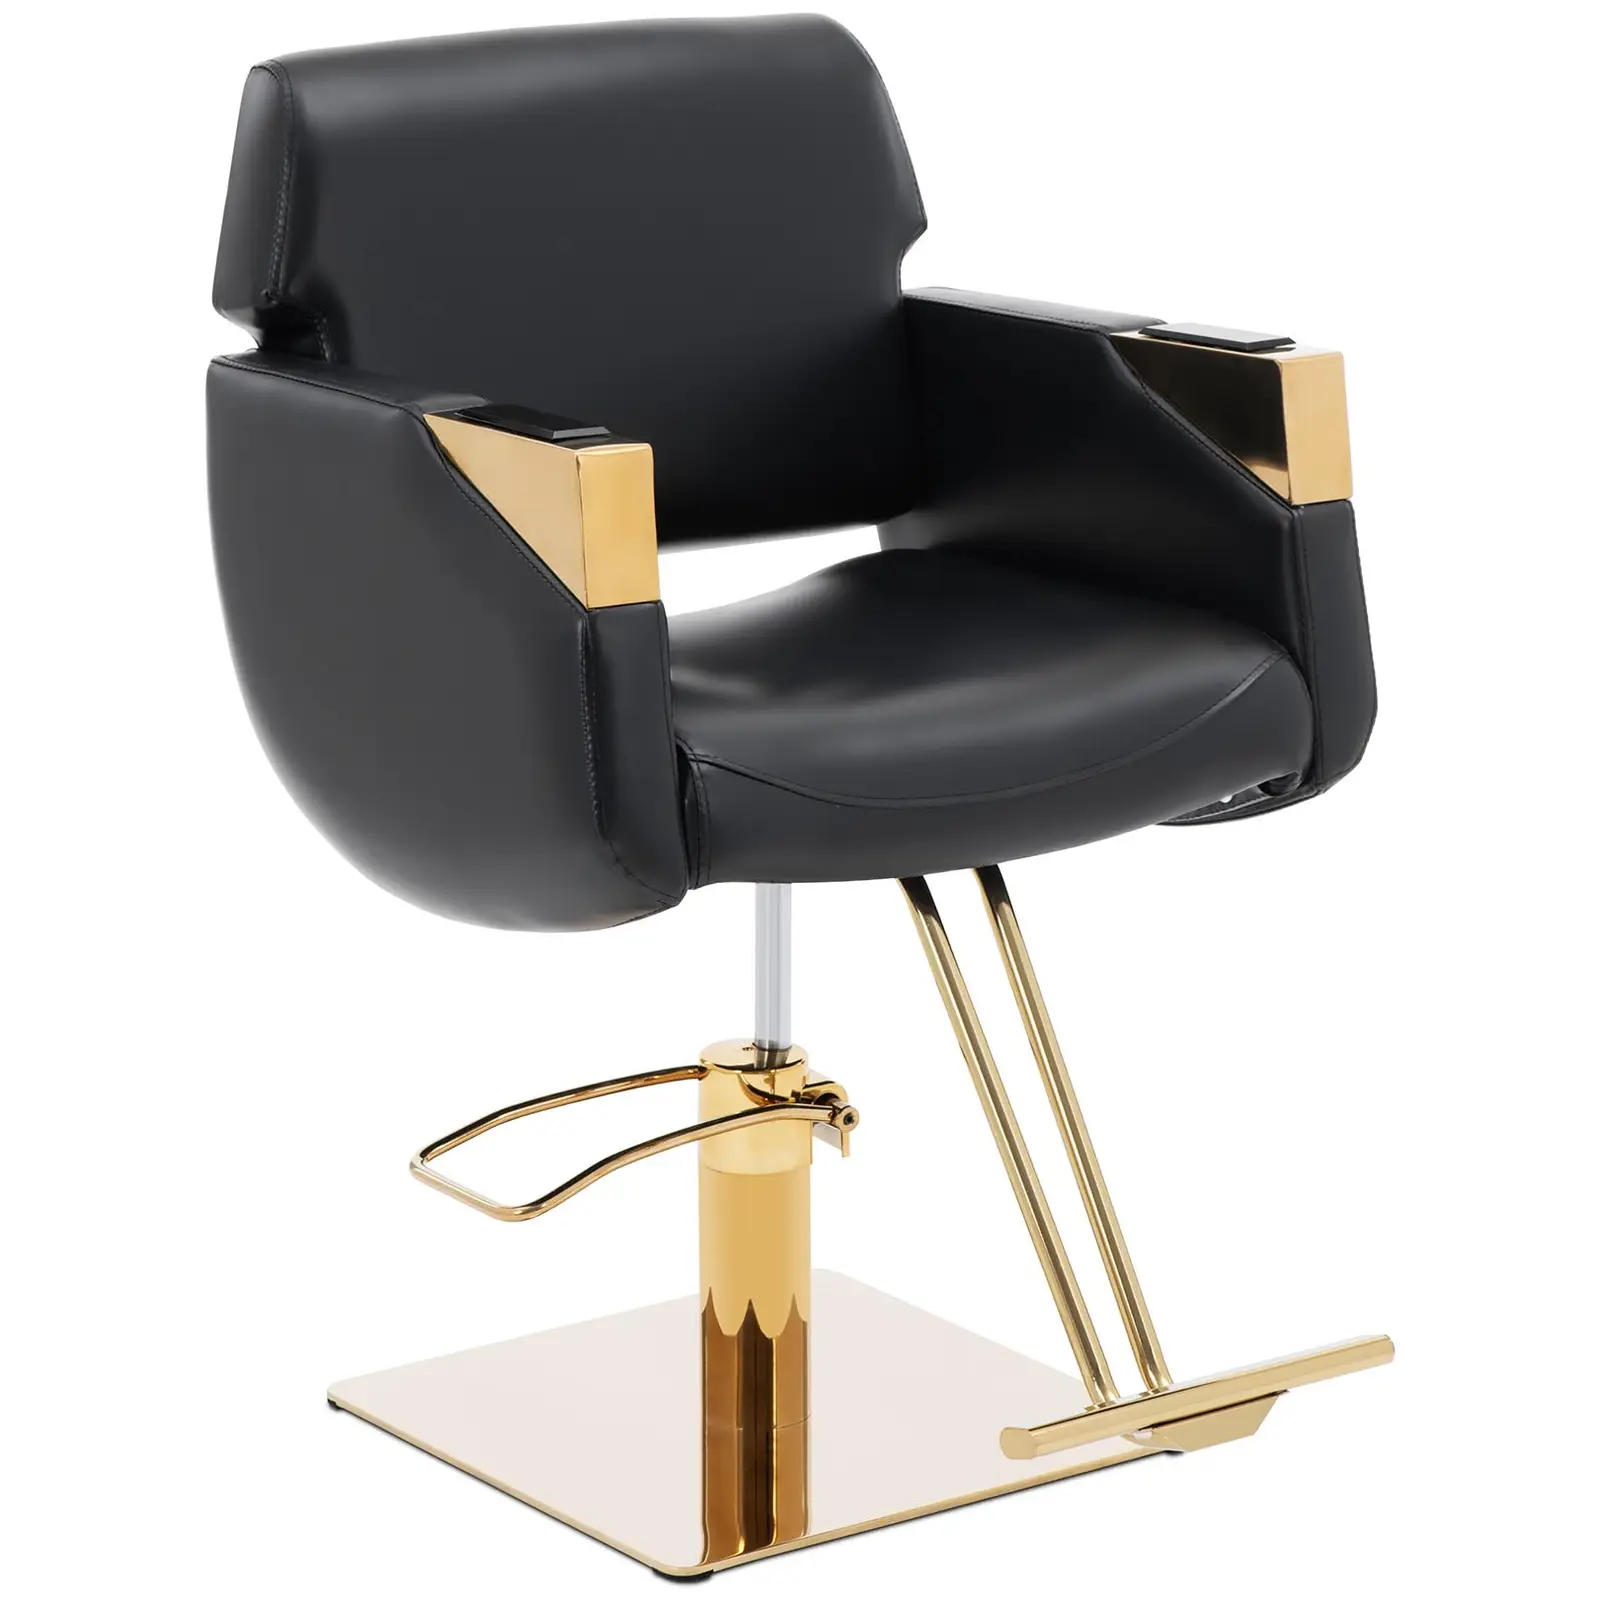 Salonska stolica s osloncem za noge - 880 - 1030 mm - 200 kg - crna / zlatna